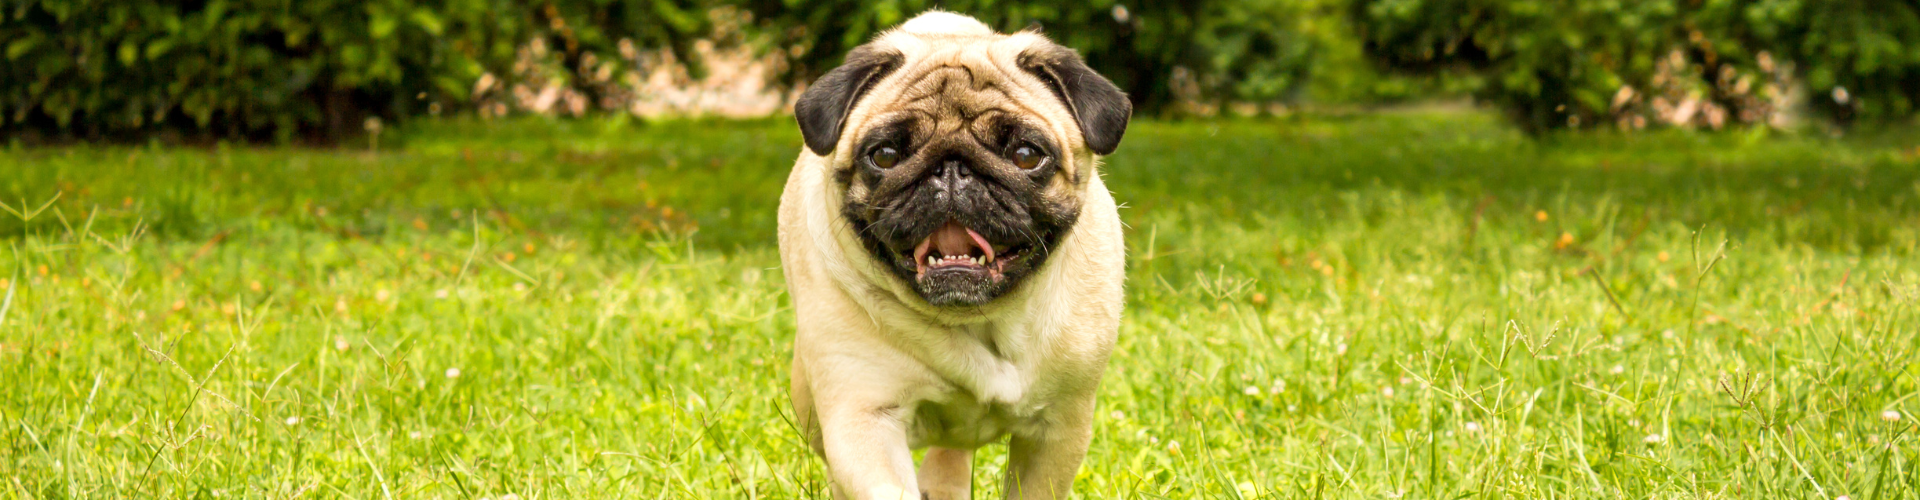 Cheerful Pug Dog Running through Green Grass